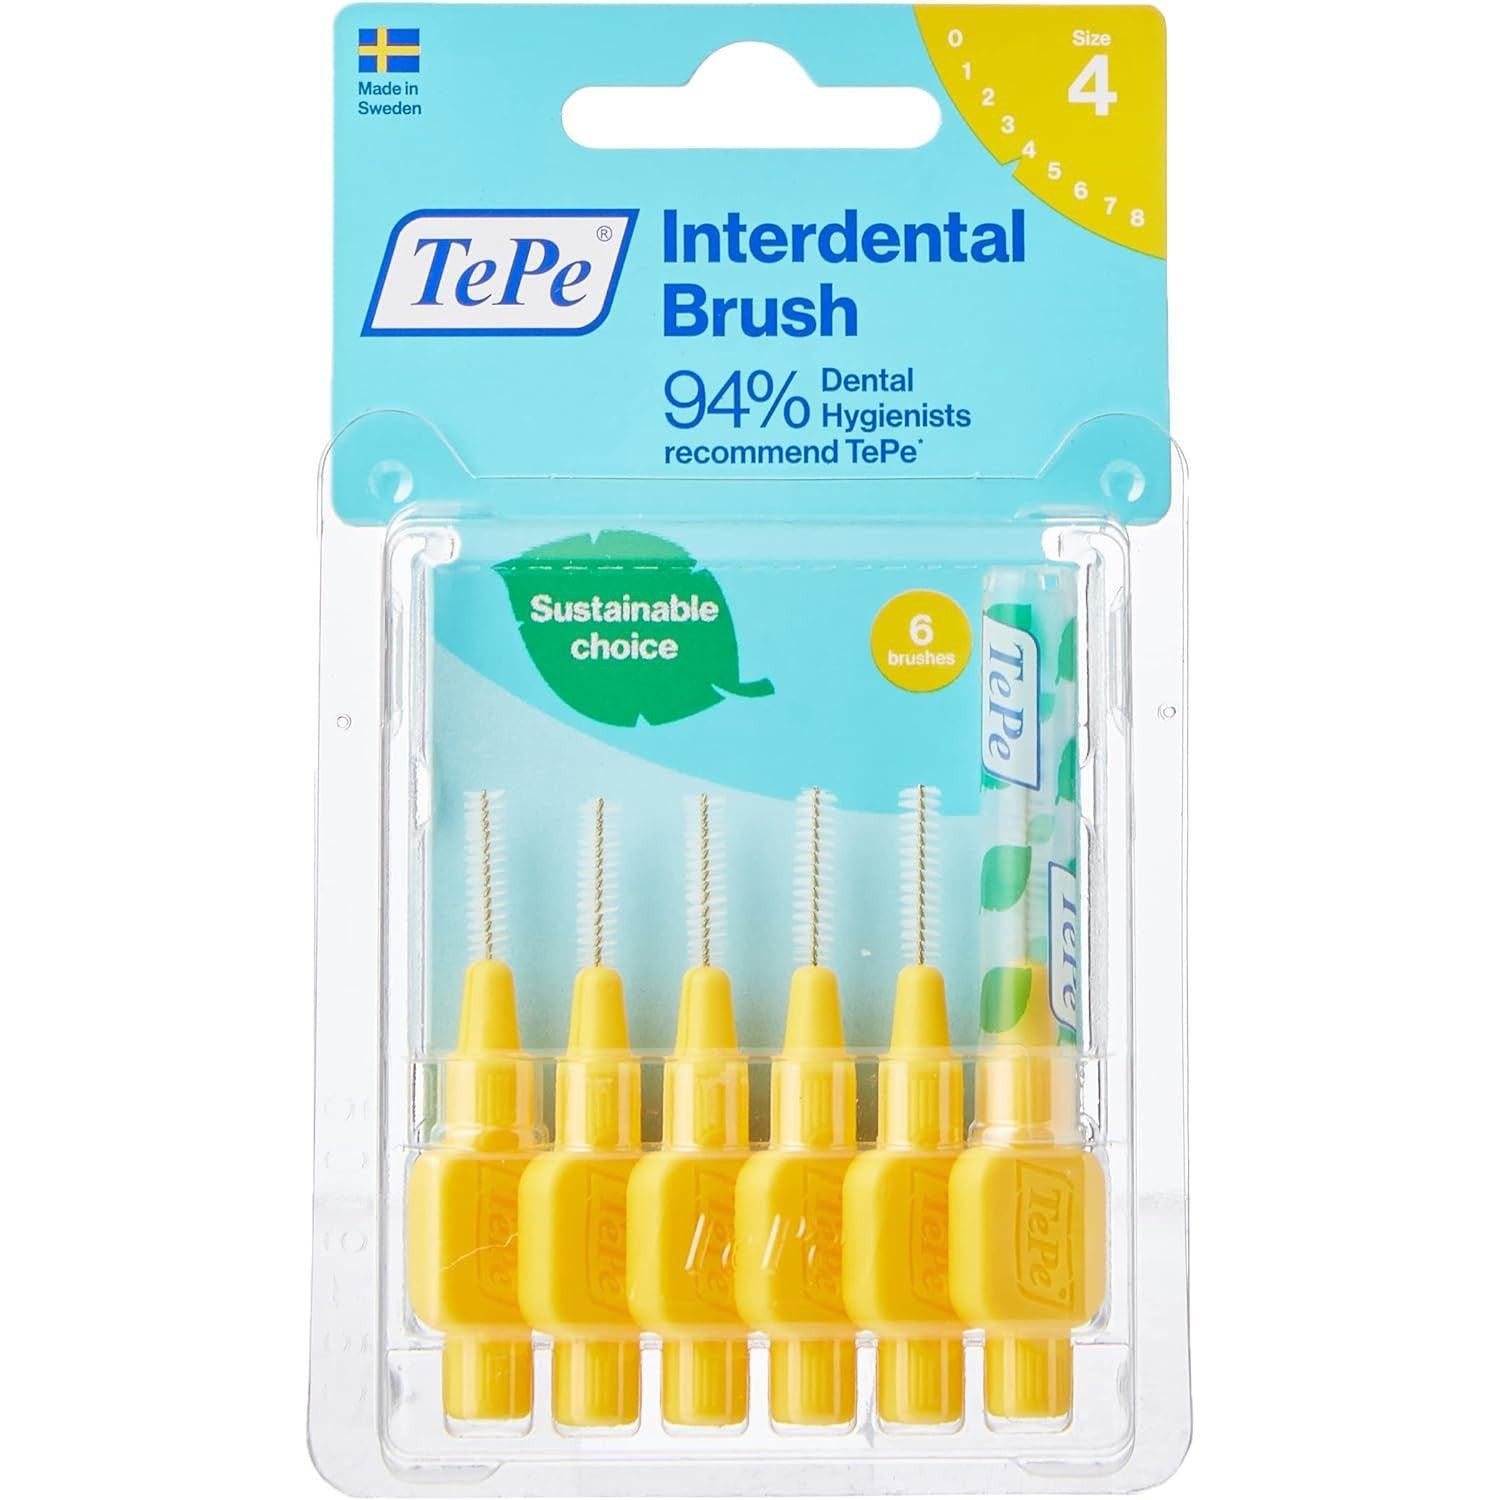 Tepe 0.7 mm Interdental Yellow Brushes - Pack of 6